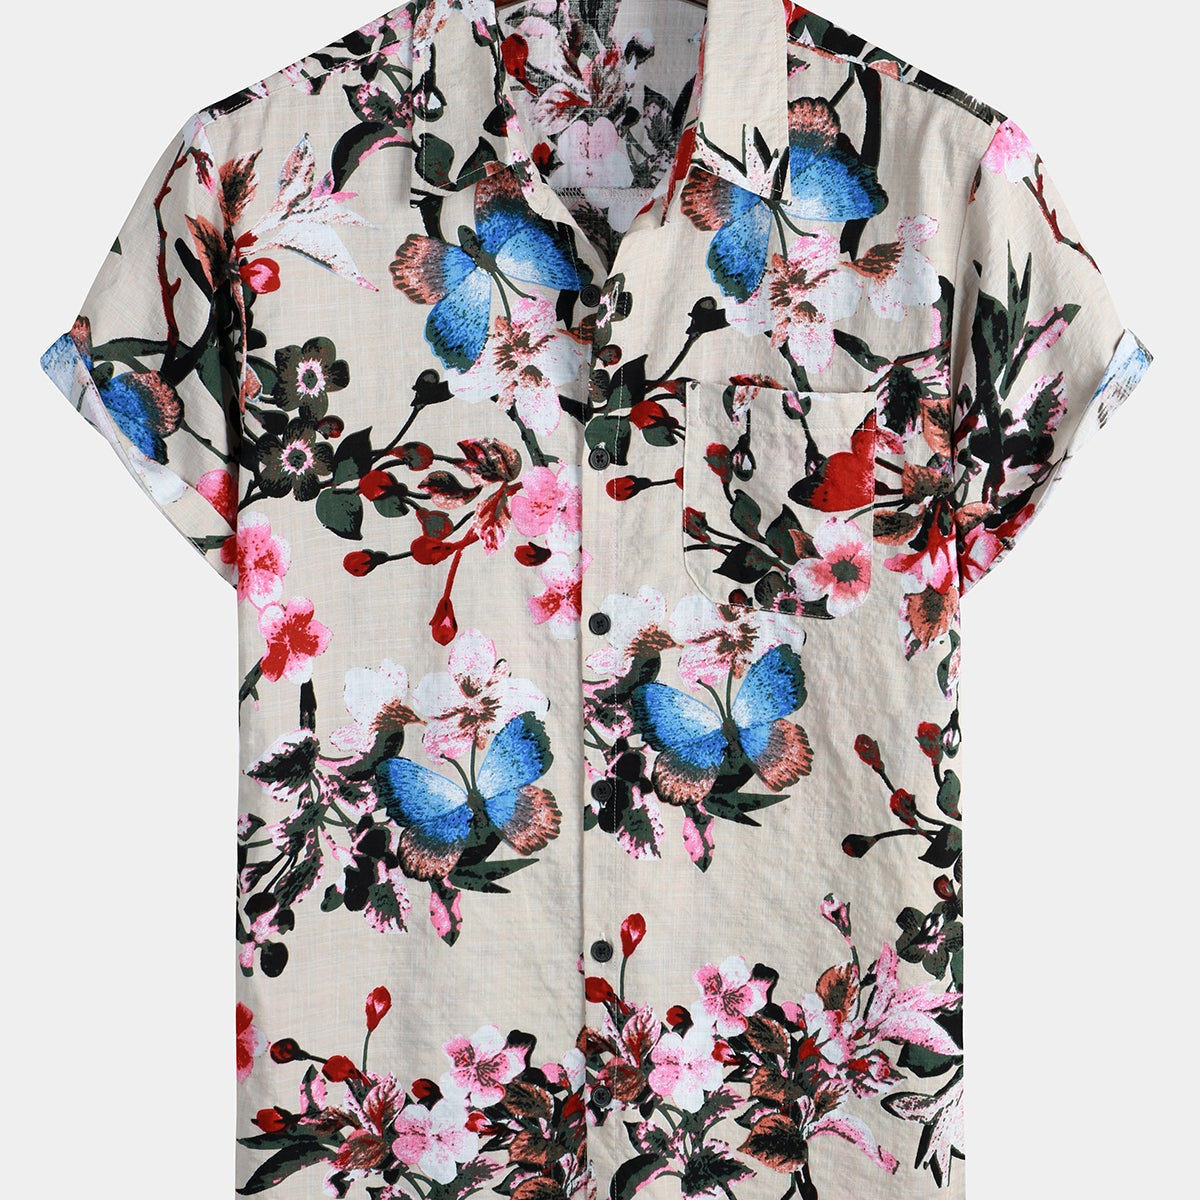 Men's Butterfly Floral Print Pocket Short Sleeve Shirt